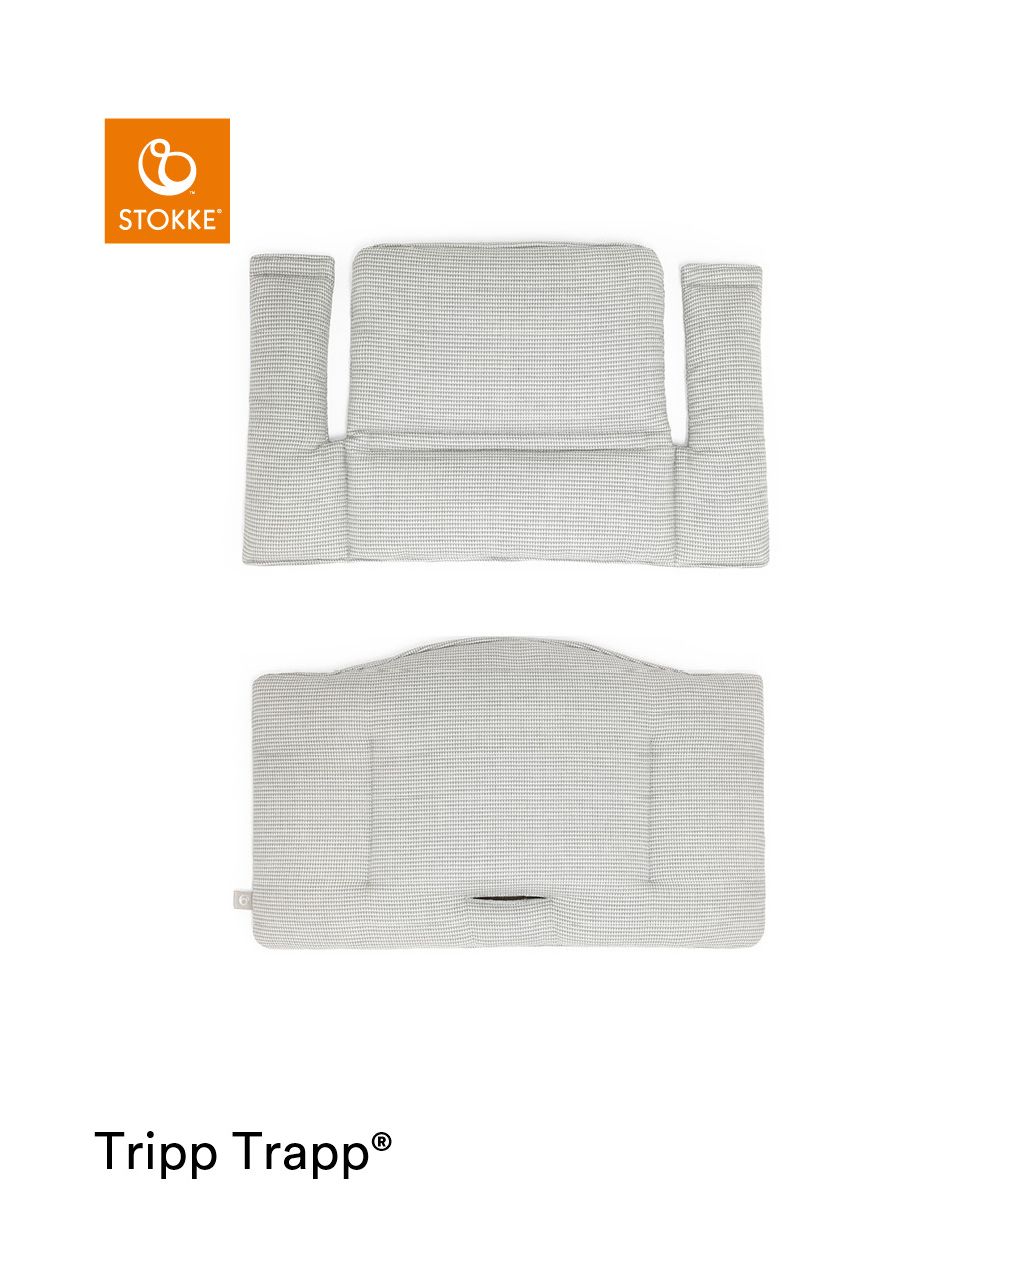 Almofada tripp trapp® classic nordic grey ocs almofada para cadeira alta, macia e abertura para seu bebê - Stokke